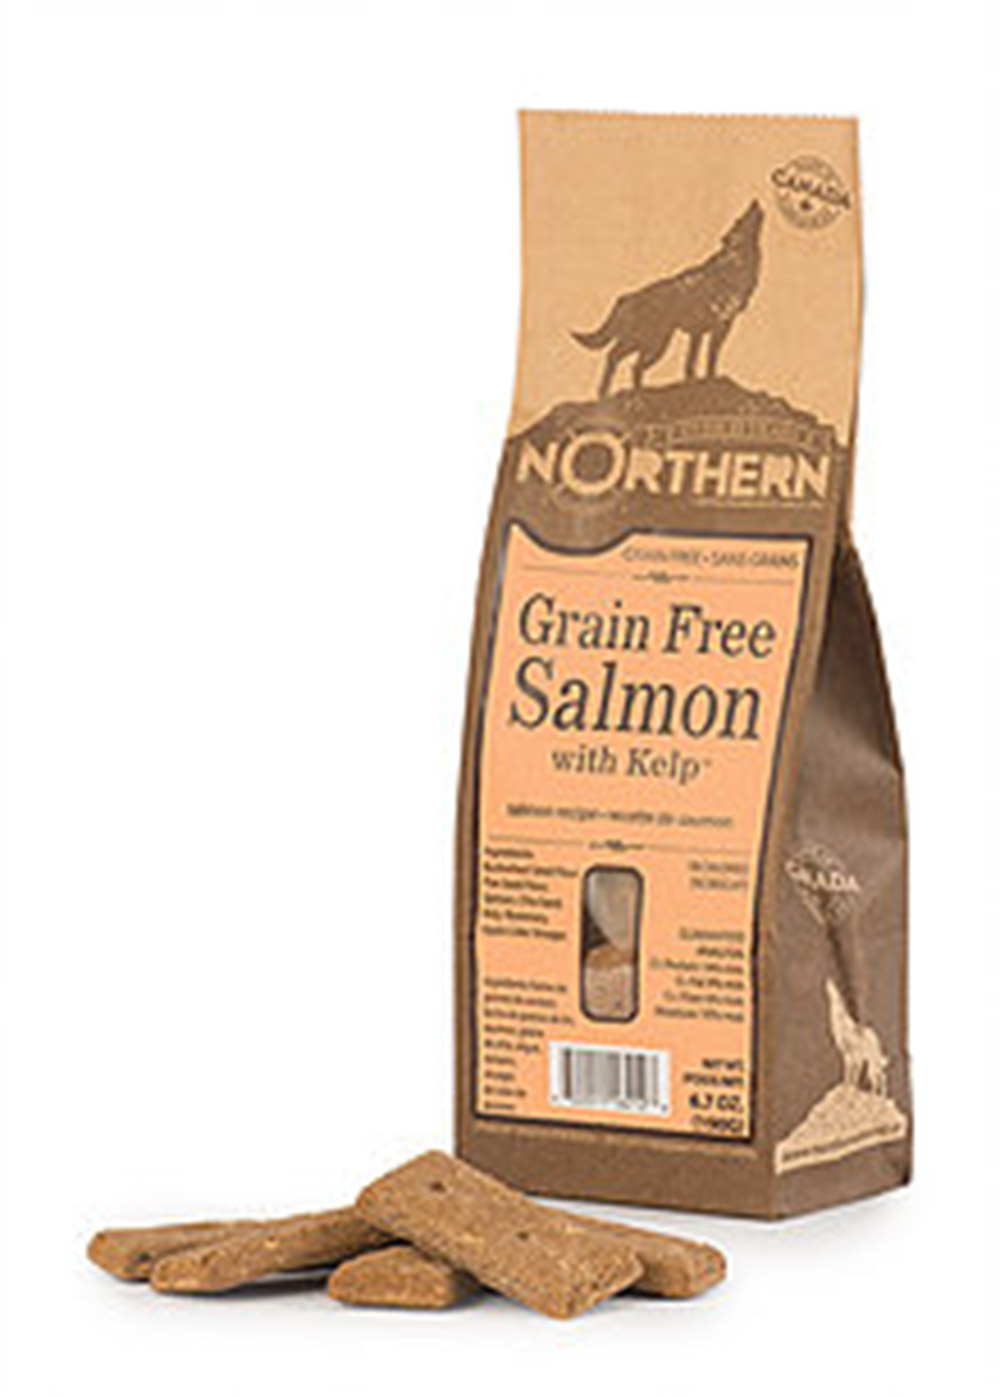 Northern-鮭魚昆布
Northern-Grain Free Salmon